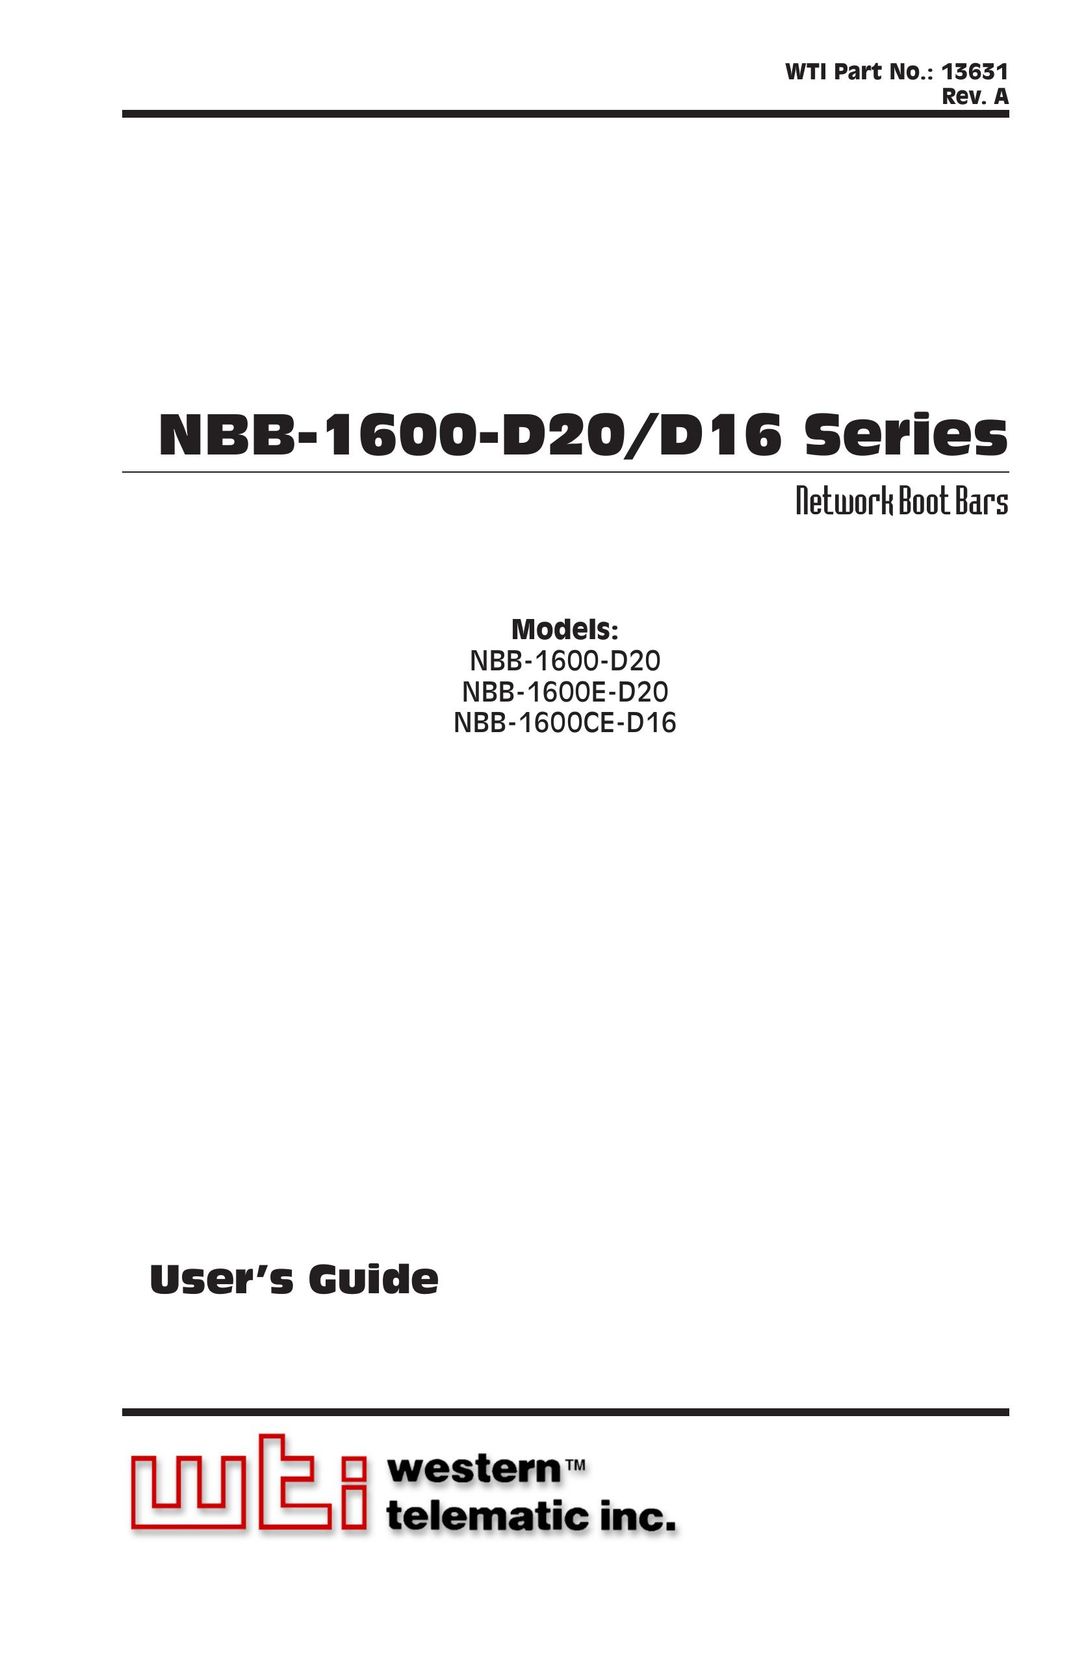 Western Telematic NBB-1600-D20, NBB-1600DE-D20, NBB-1600CE-D16 Network Card User Manual (Page 1)